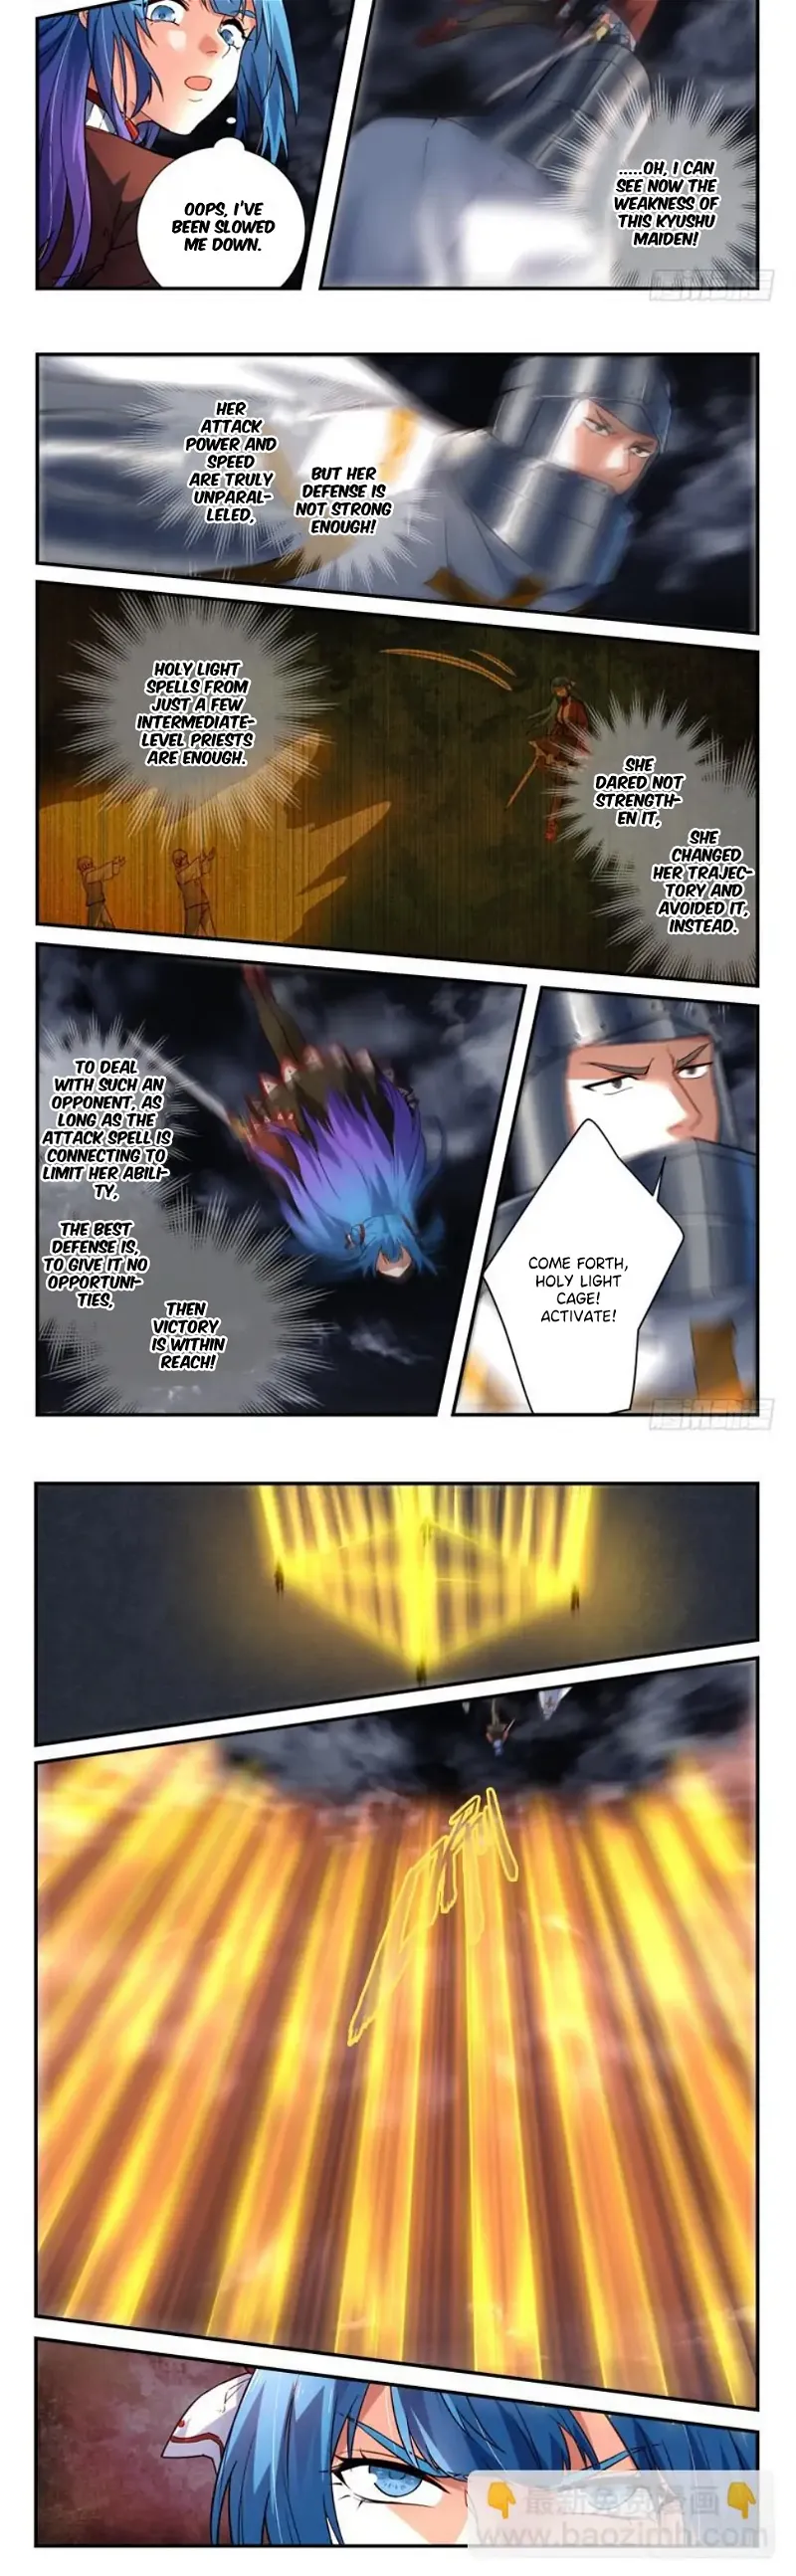 Spirit Blade Mountain Chapter 498 page 5